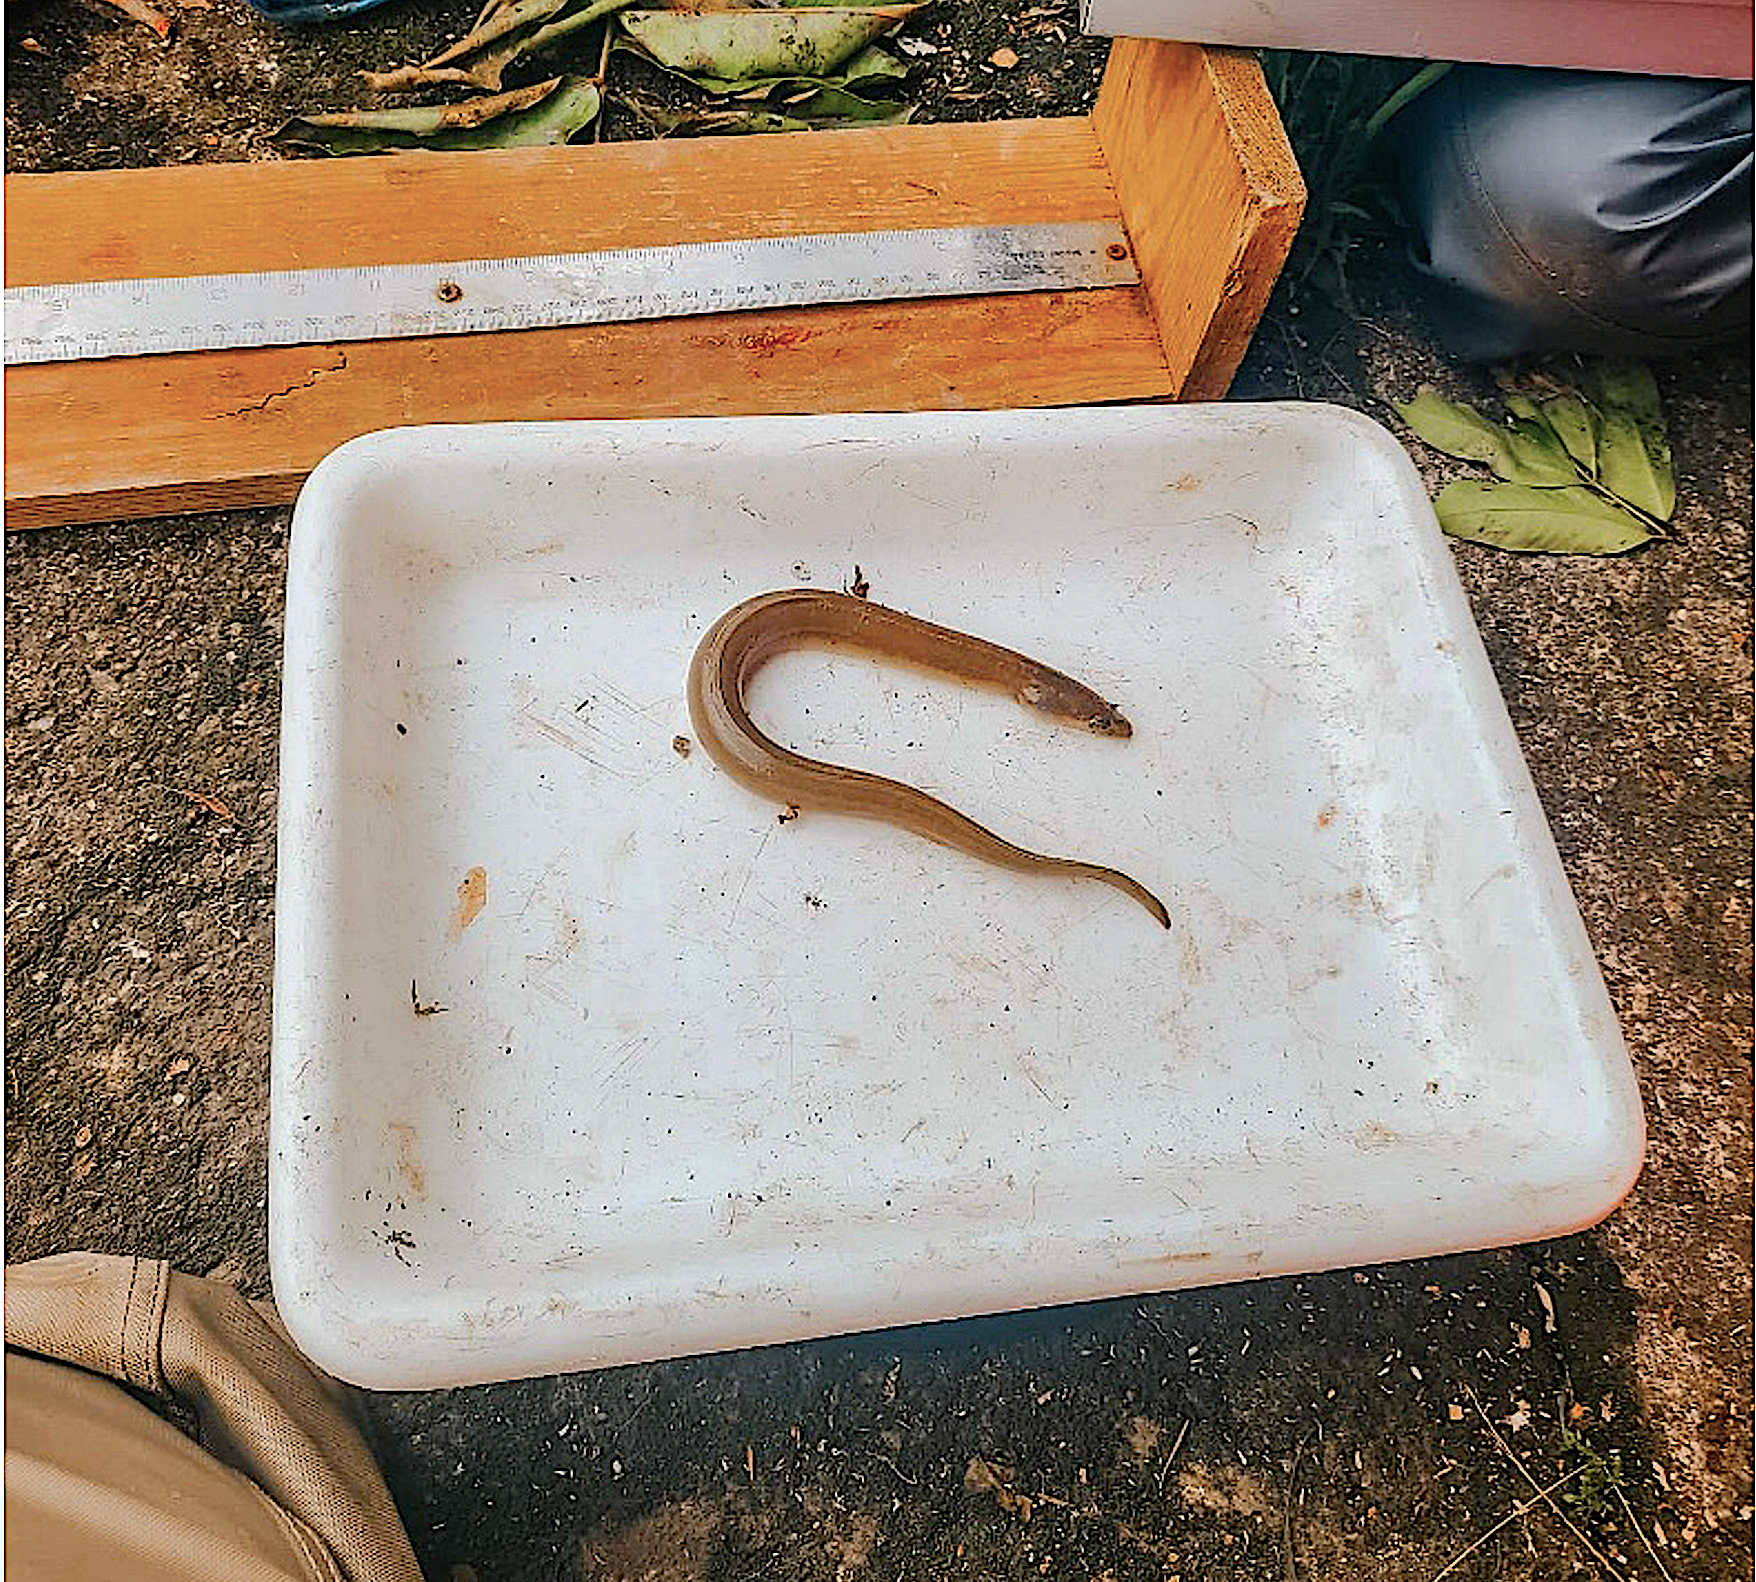 An American eel